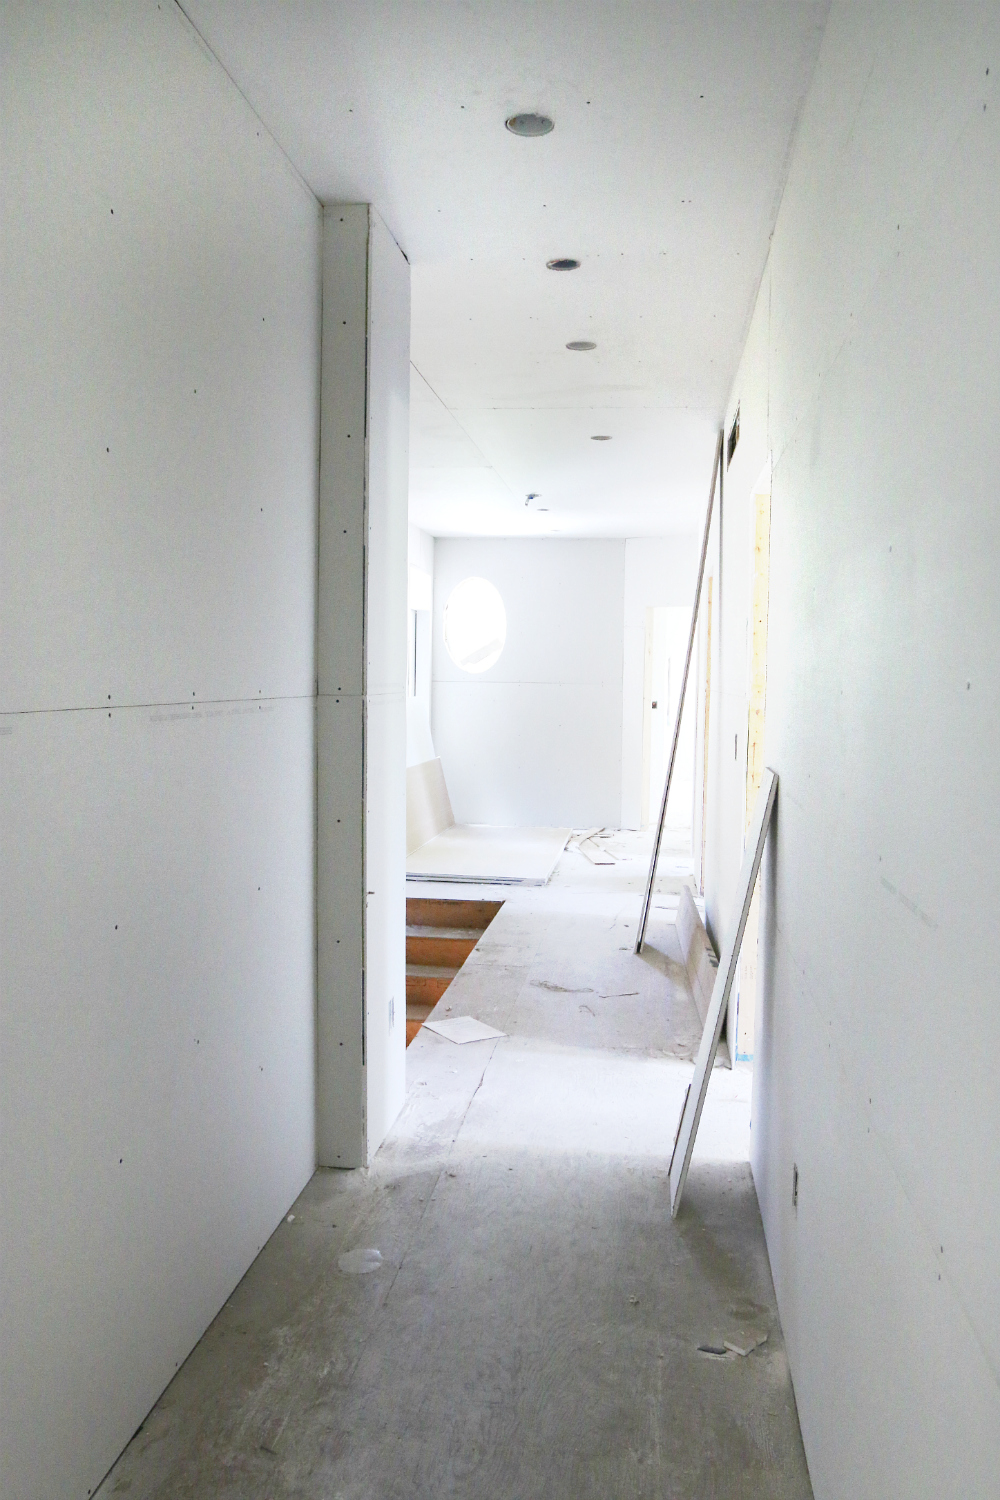 Building Series: Dry Wall Hallway